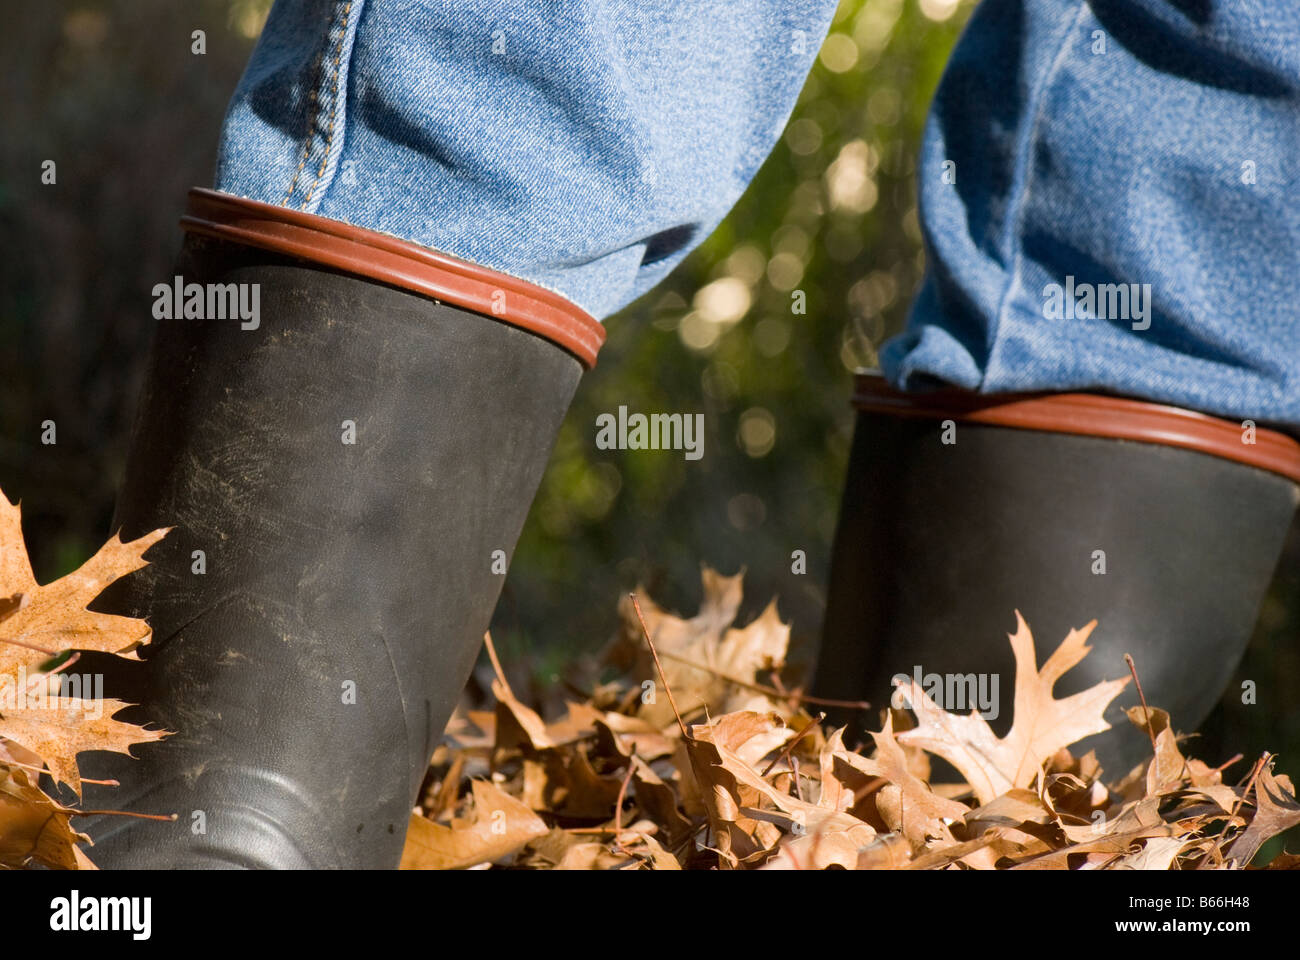 Gumboot in autumn leaves Stock Photo